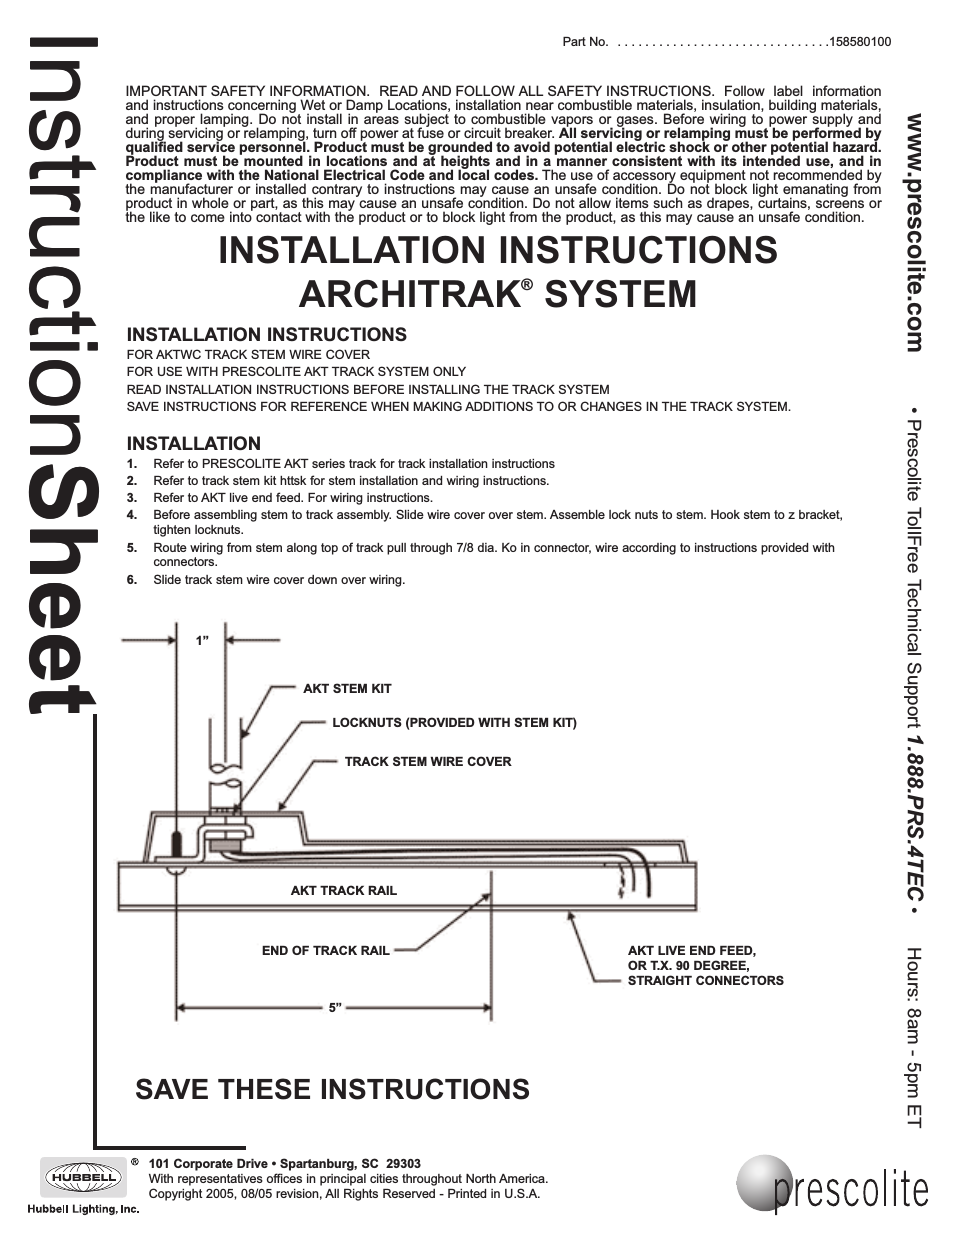 ARCHITRAK SYSTEM AKTWC - Wireway Cover